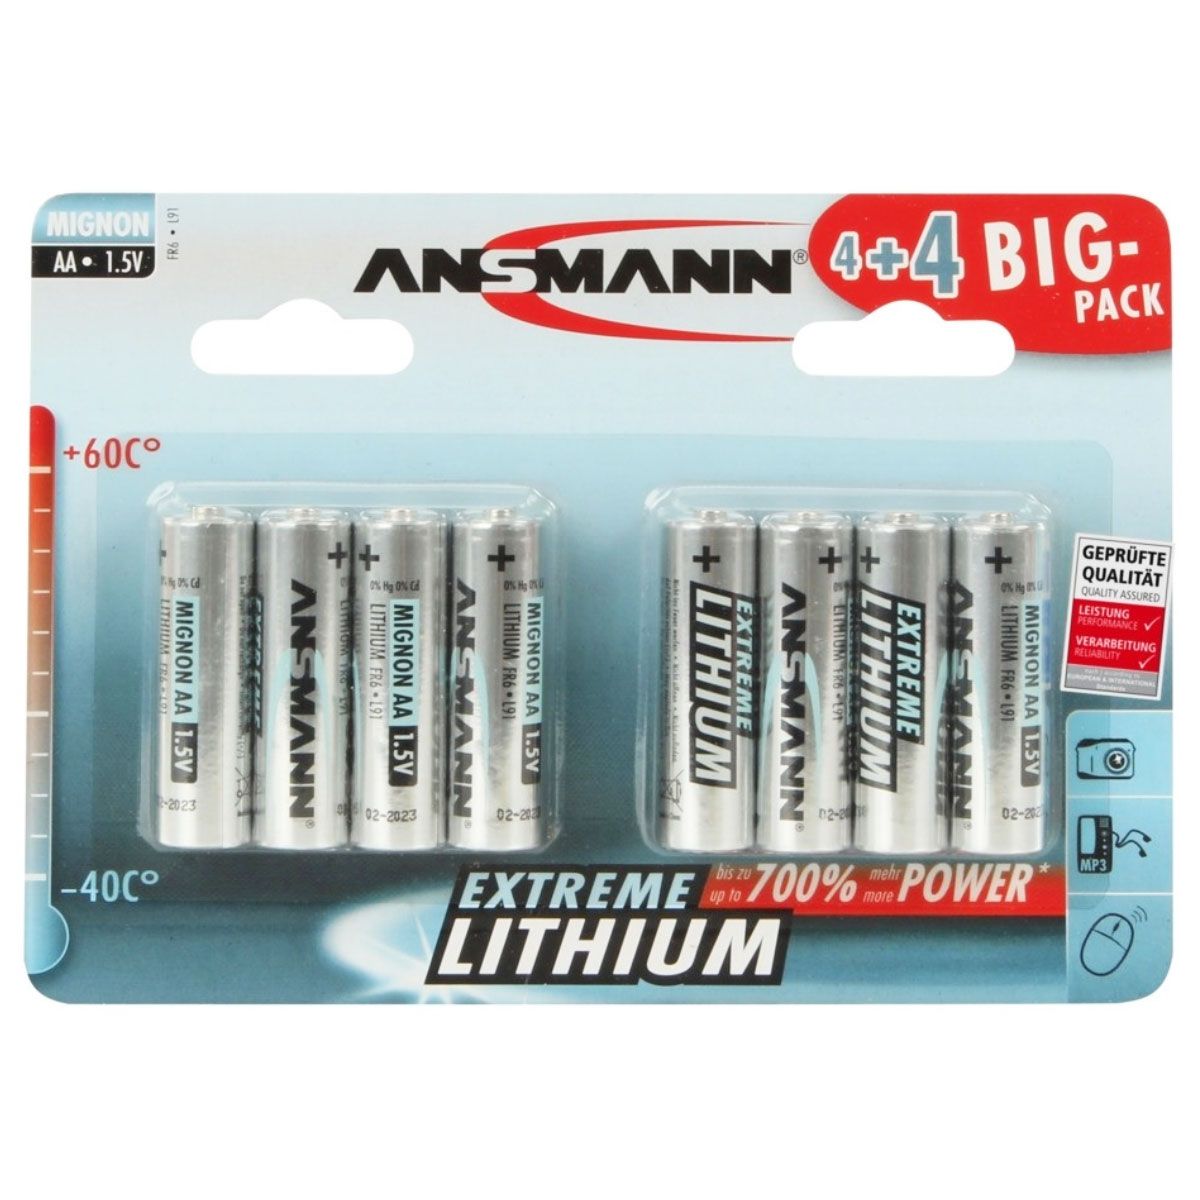 Extreme Lithium Lithium Batteries